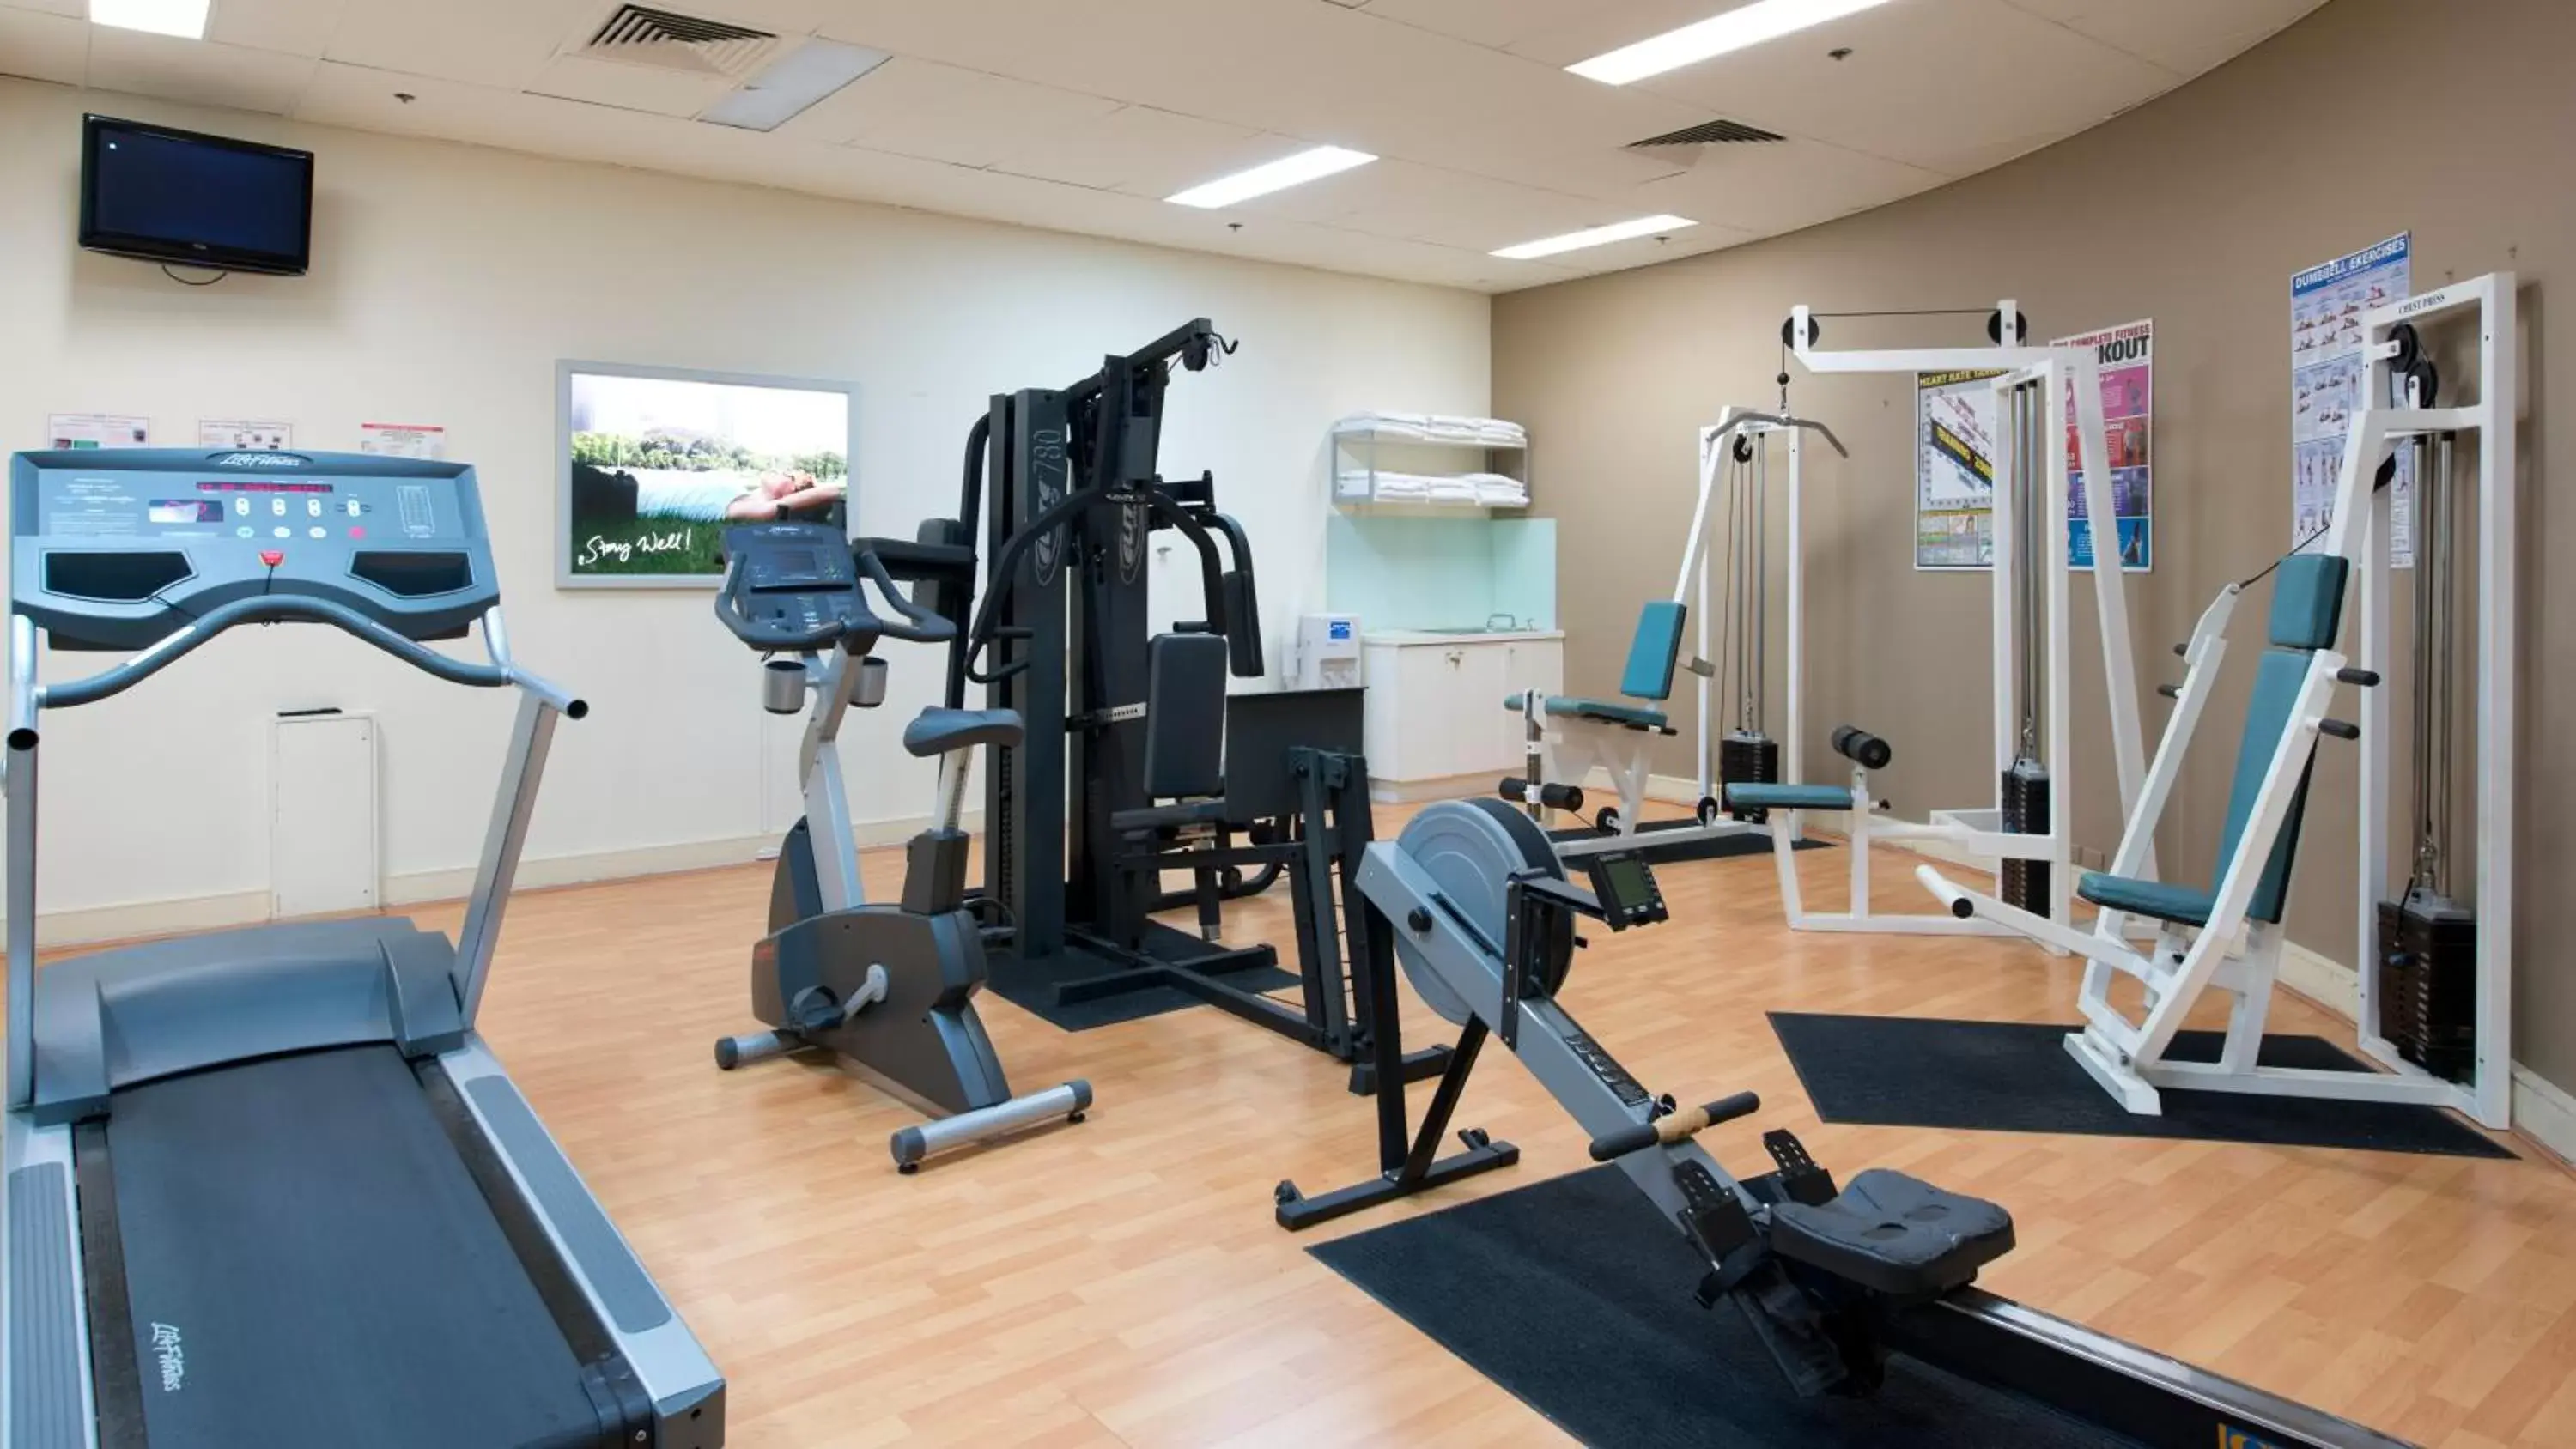 Fitness centre/facilities, Fitness Center/Facilities in Park Regis North Quay